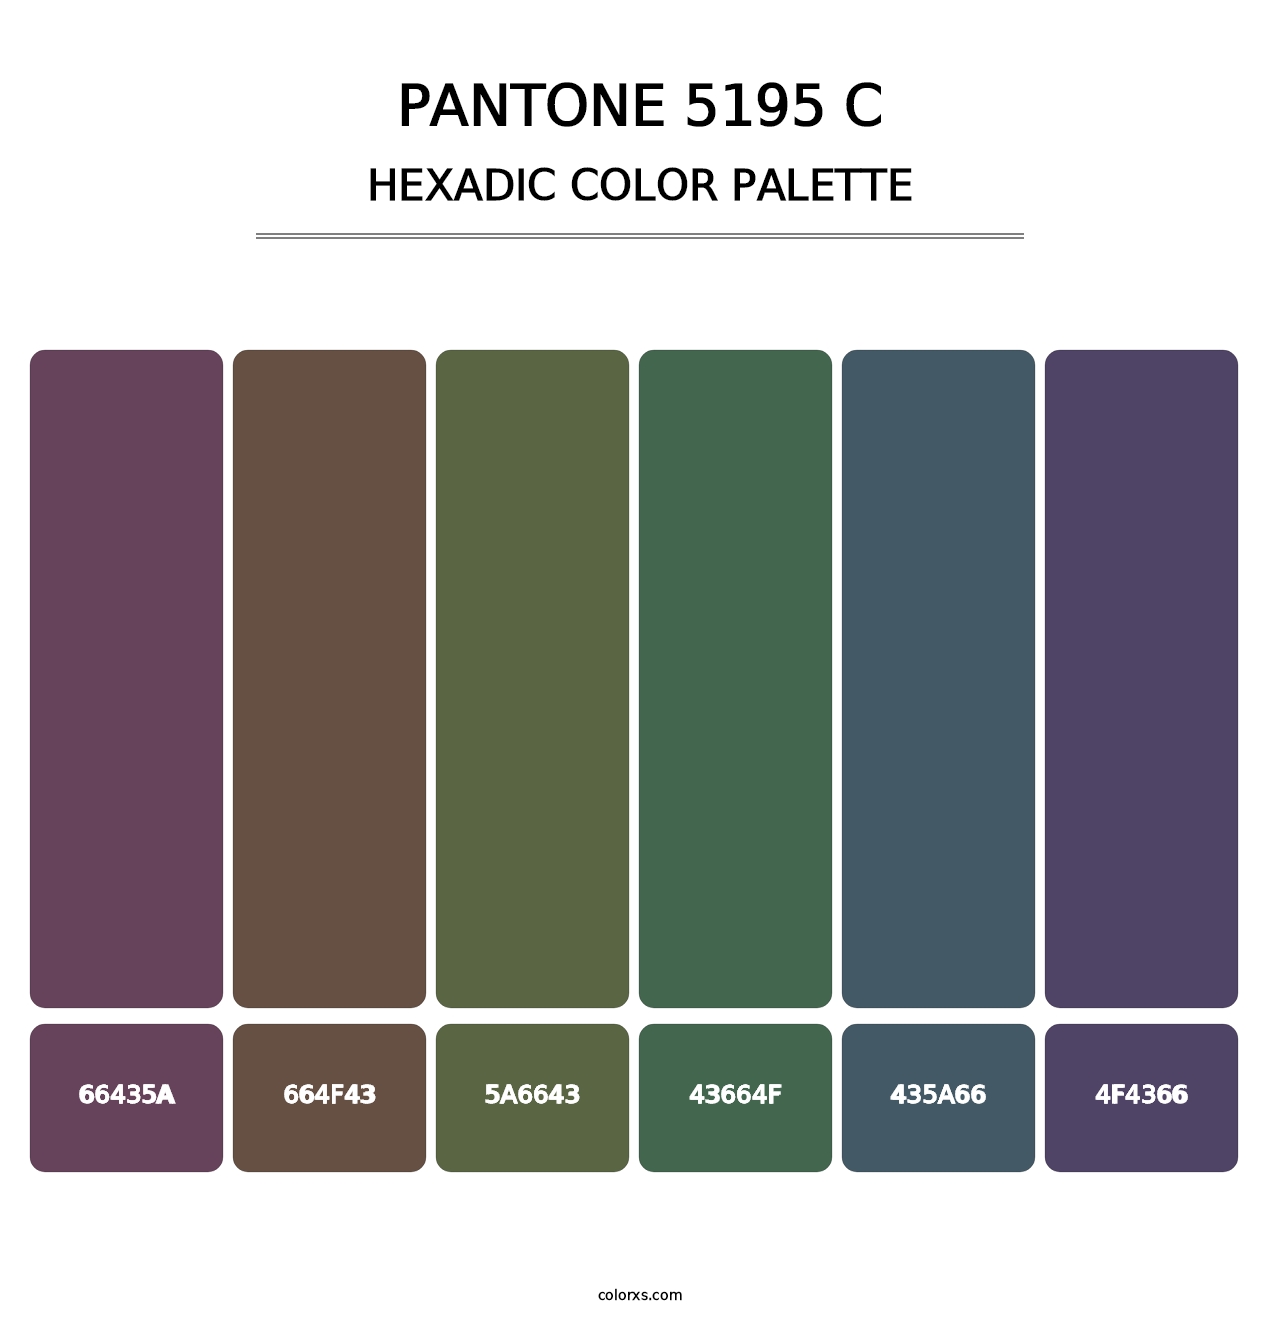 PANTONE 5195 C - Hexadic Color Palette